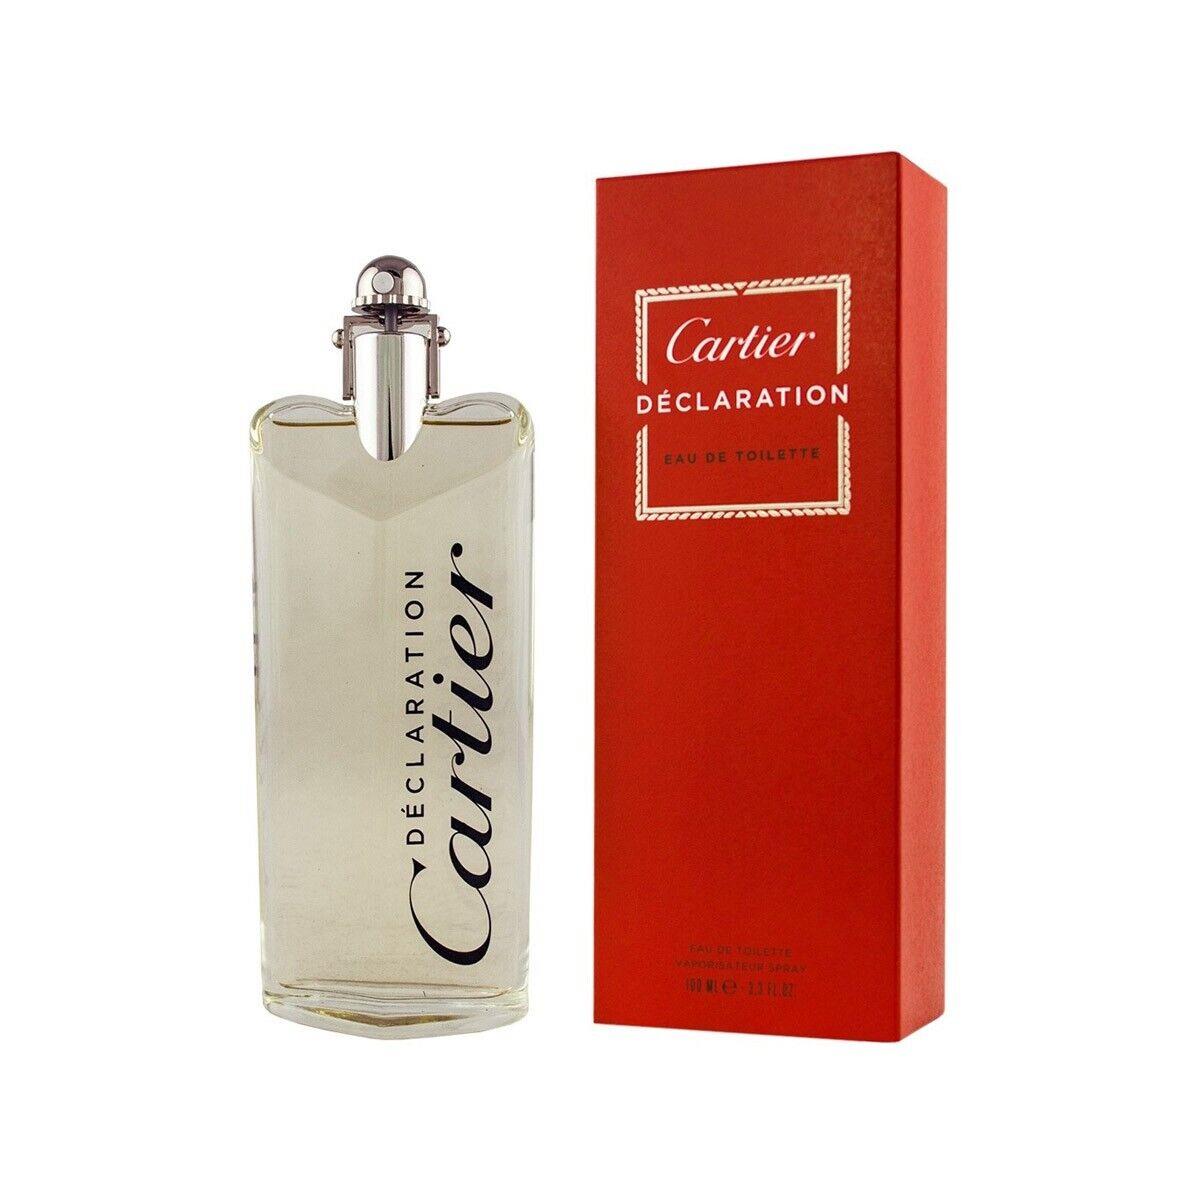 Cartier Decleration 3.3 oz / 100 ml Edt Spray Cologne For Men